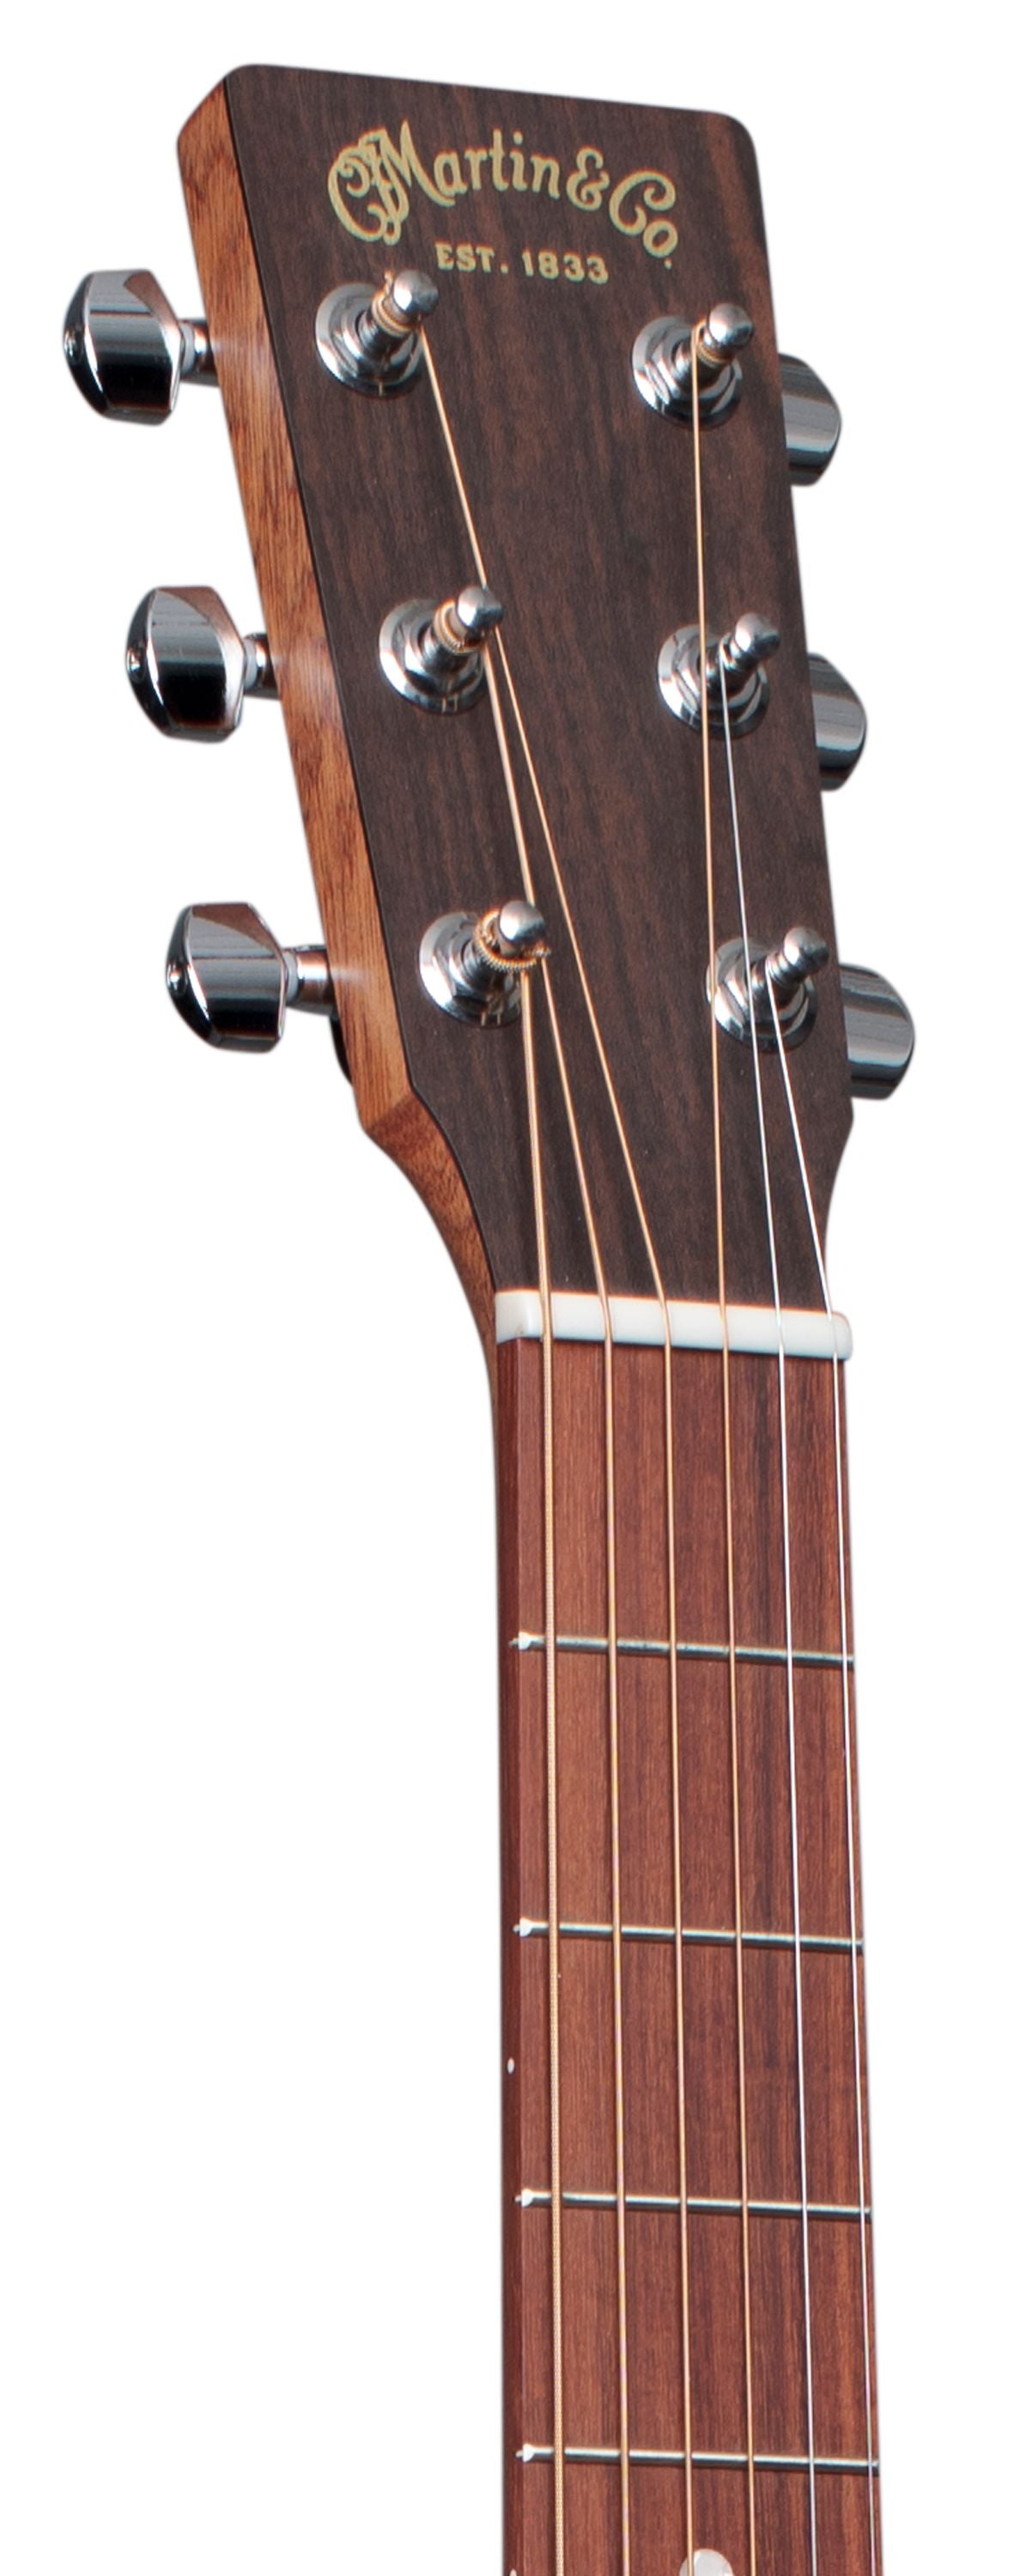 C. F. Martin DCX2E-03 Electric Acoustic Guitar - Rosewood木結他